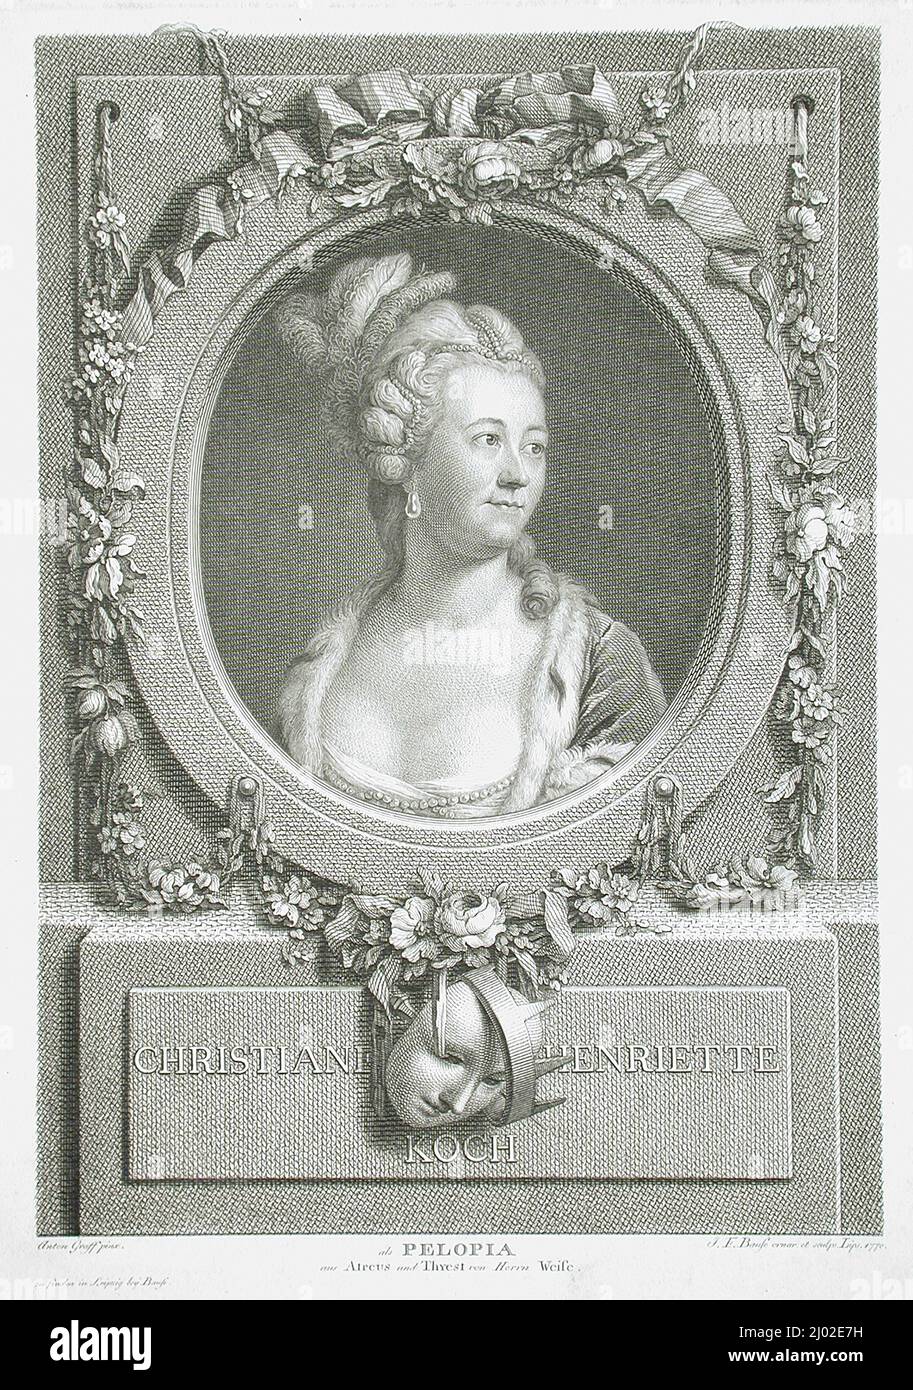 Christiane Henriette Koch como Pelopia. Johann Friedrich Bause (Alemania, Halle, 1738-1814). Alemania, 1770. Impresiones; grabados. Grabado Foto de stock